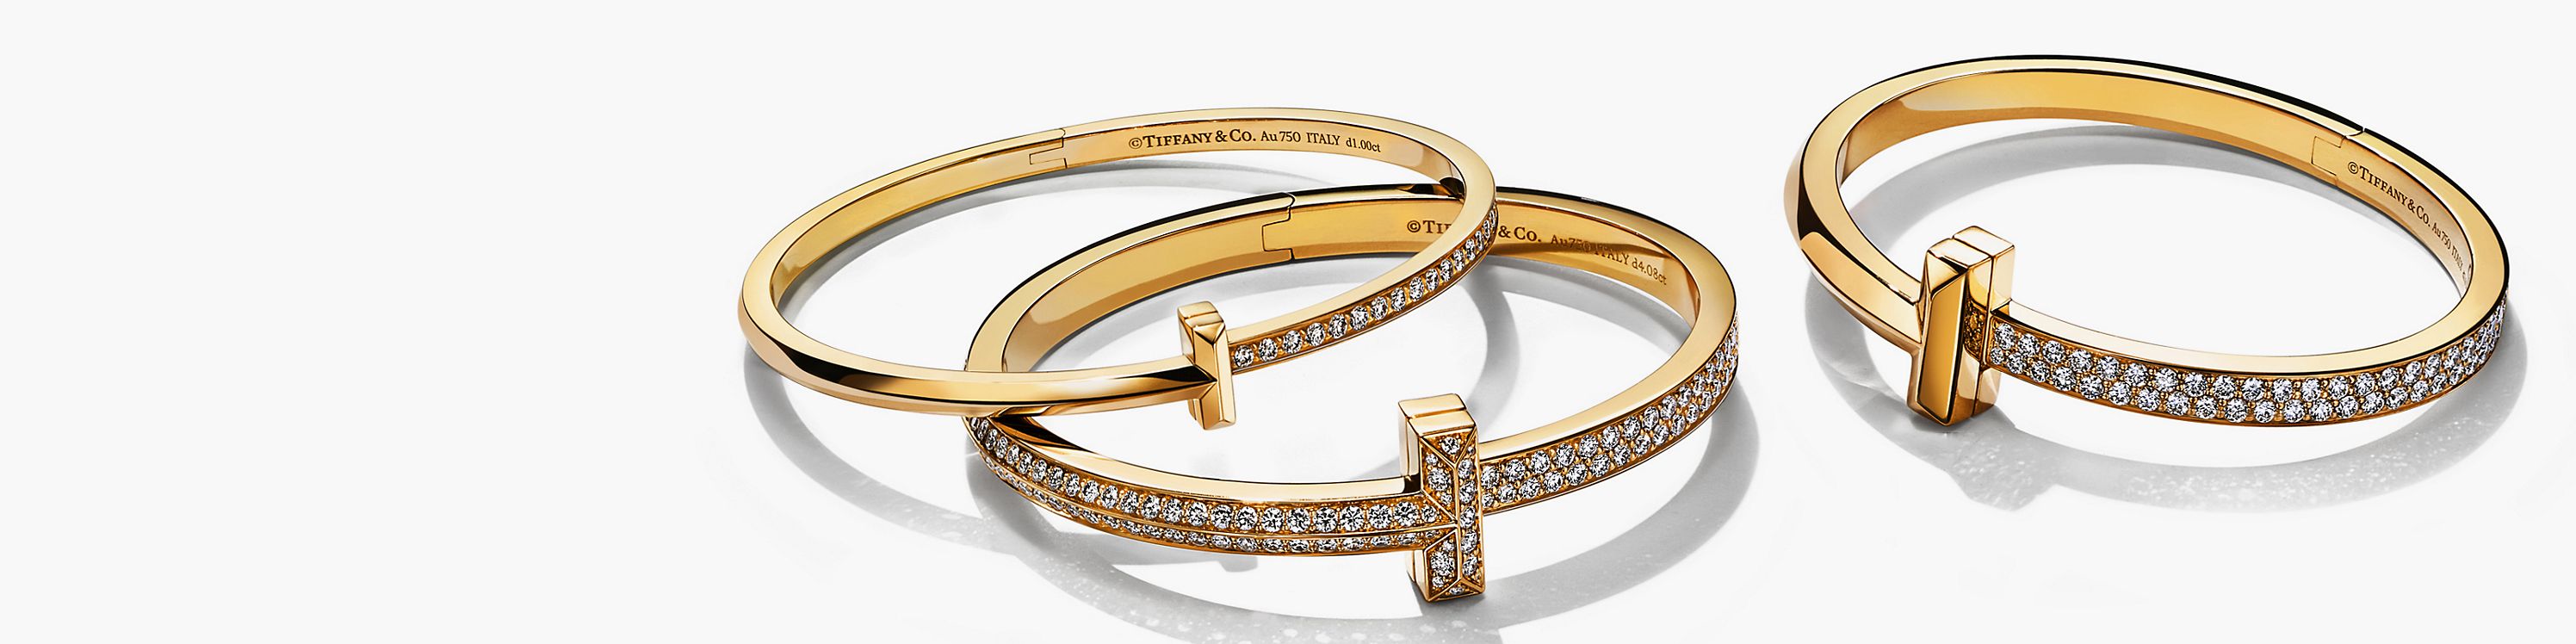 Most Popular Tiffany & Co. Jewelry